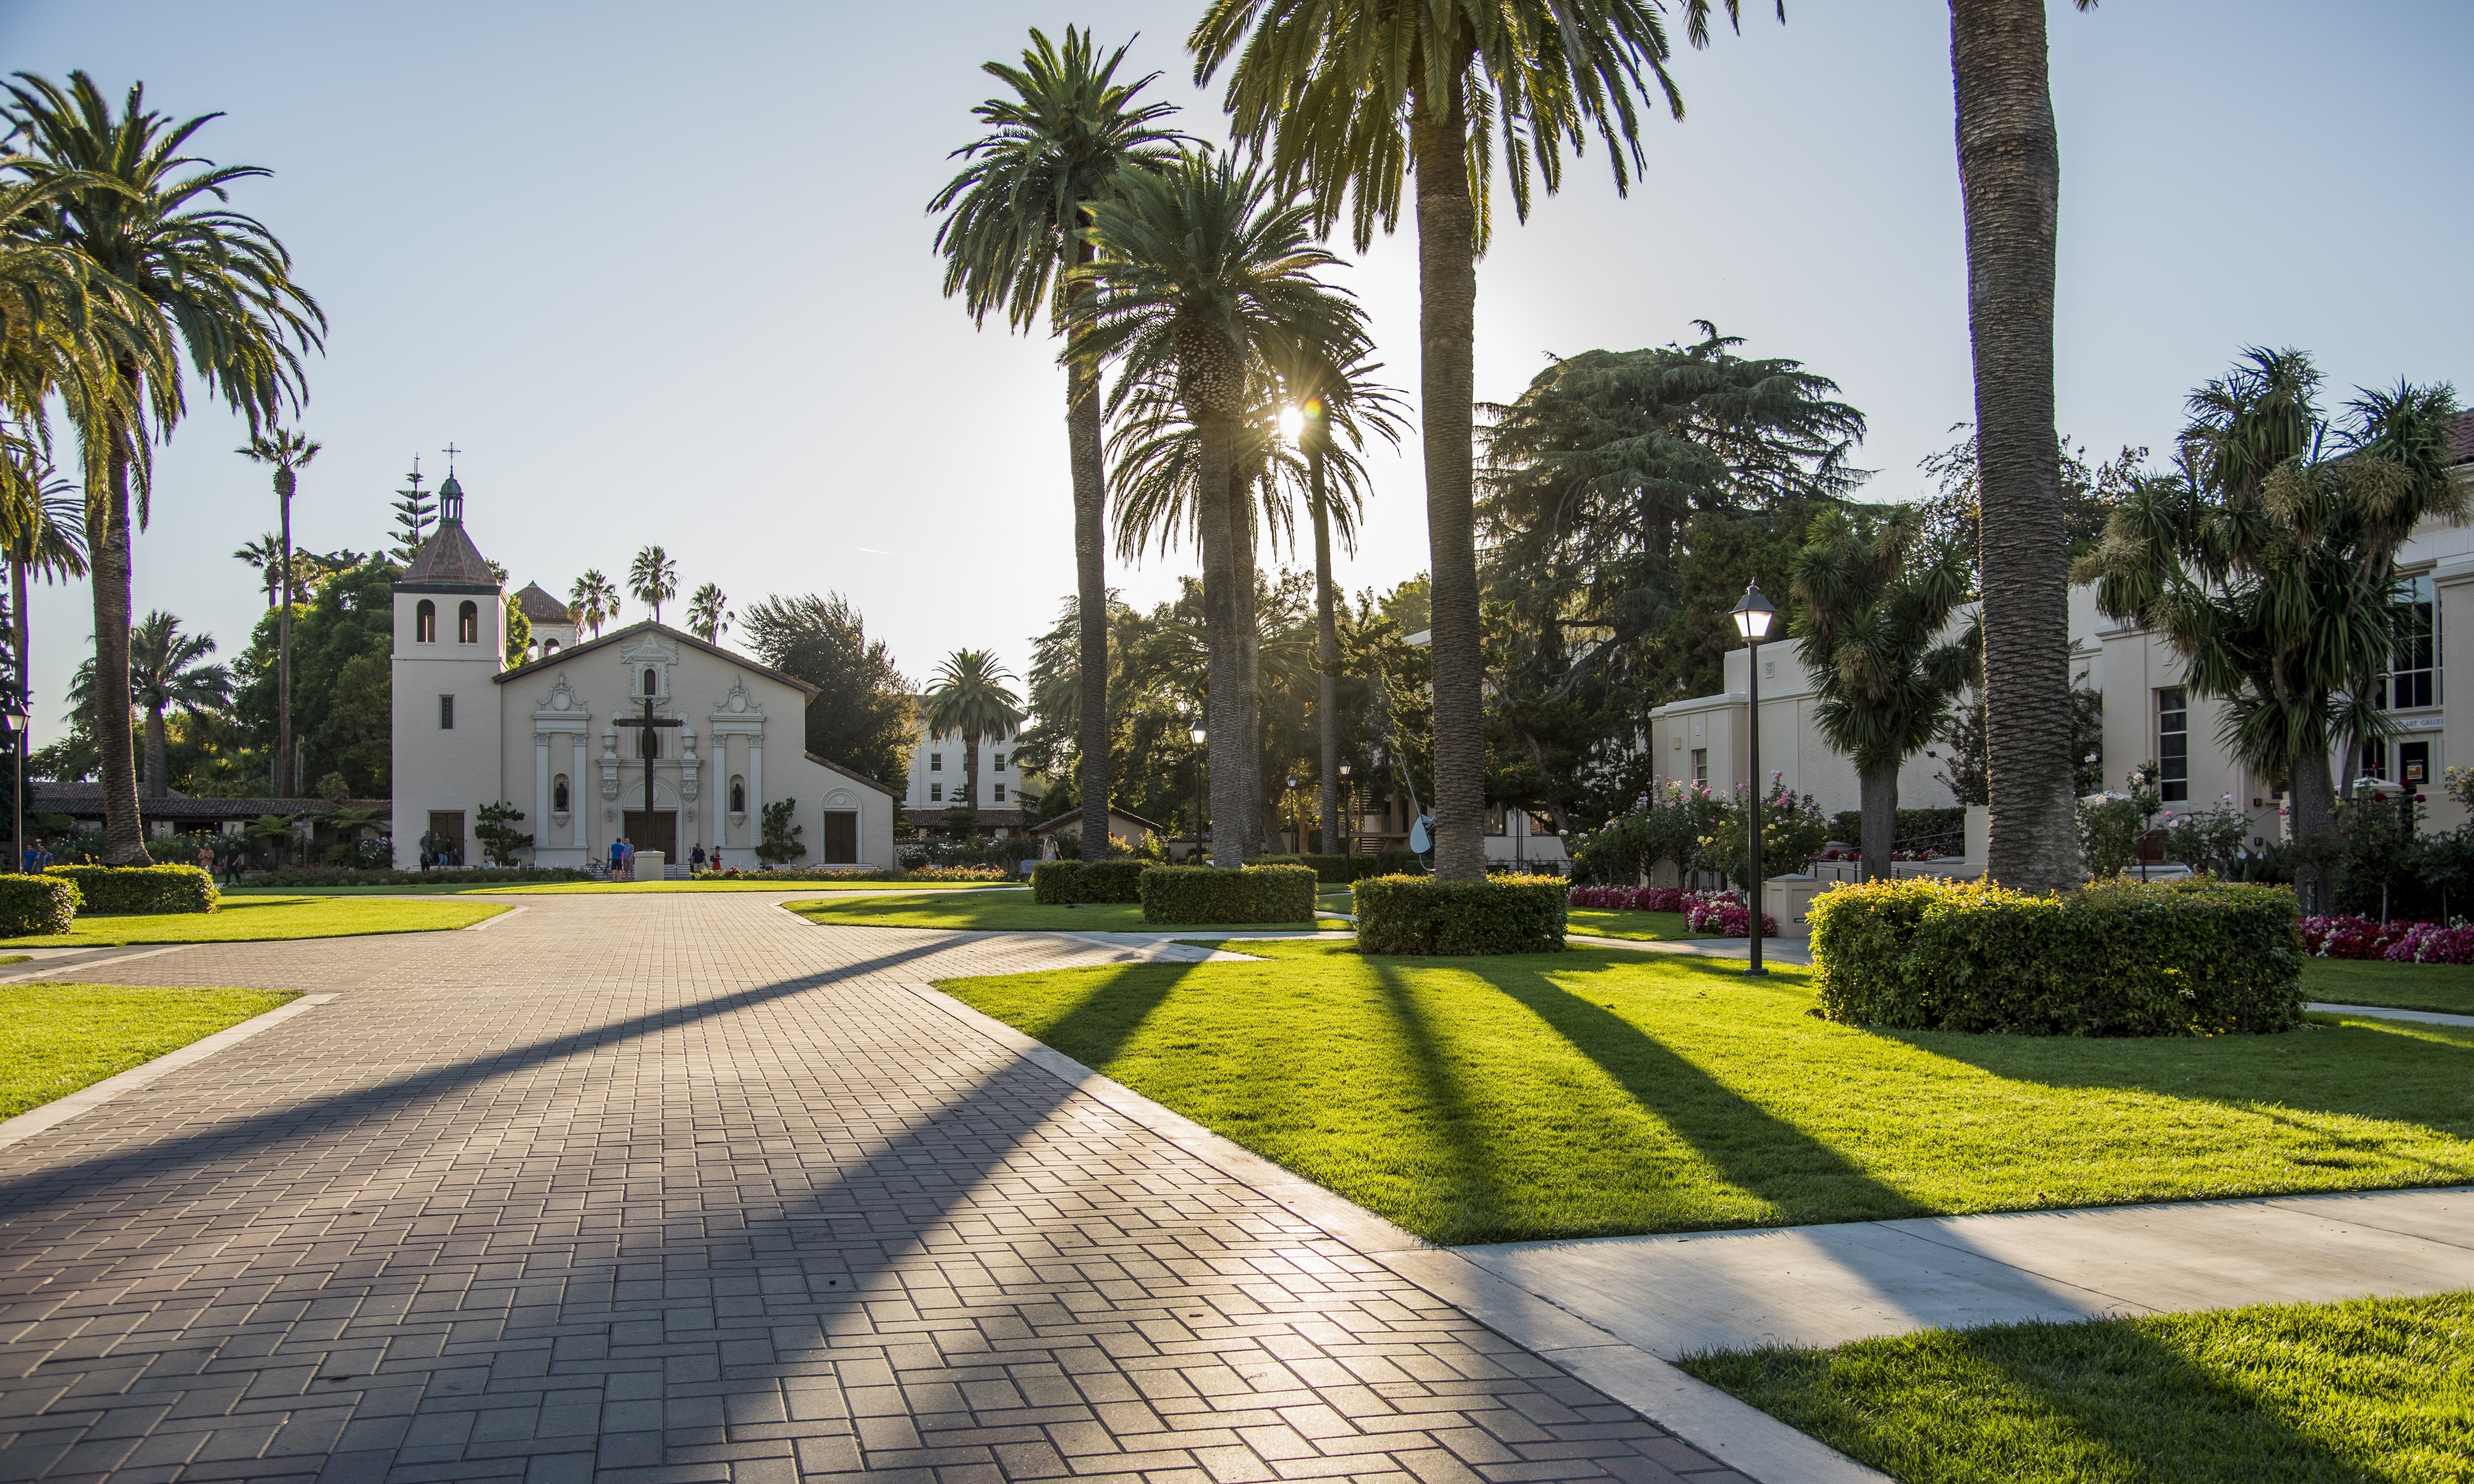 Silicon Valley - About SCU - Santa Clara University